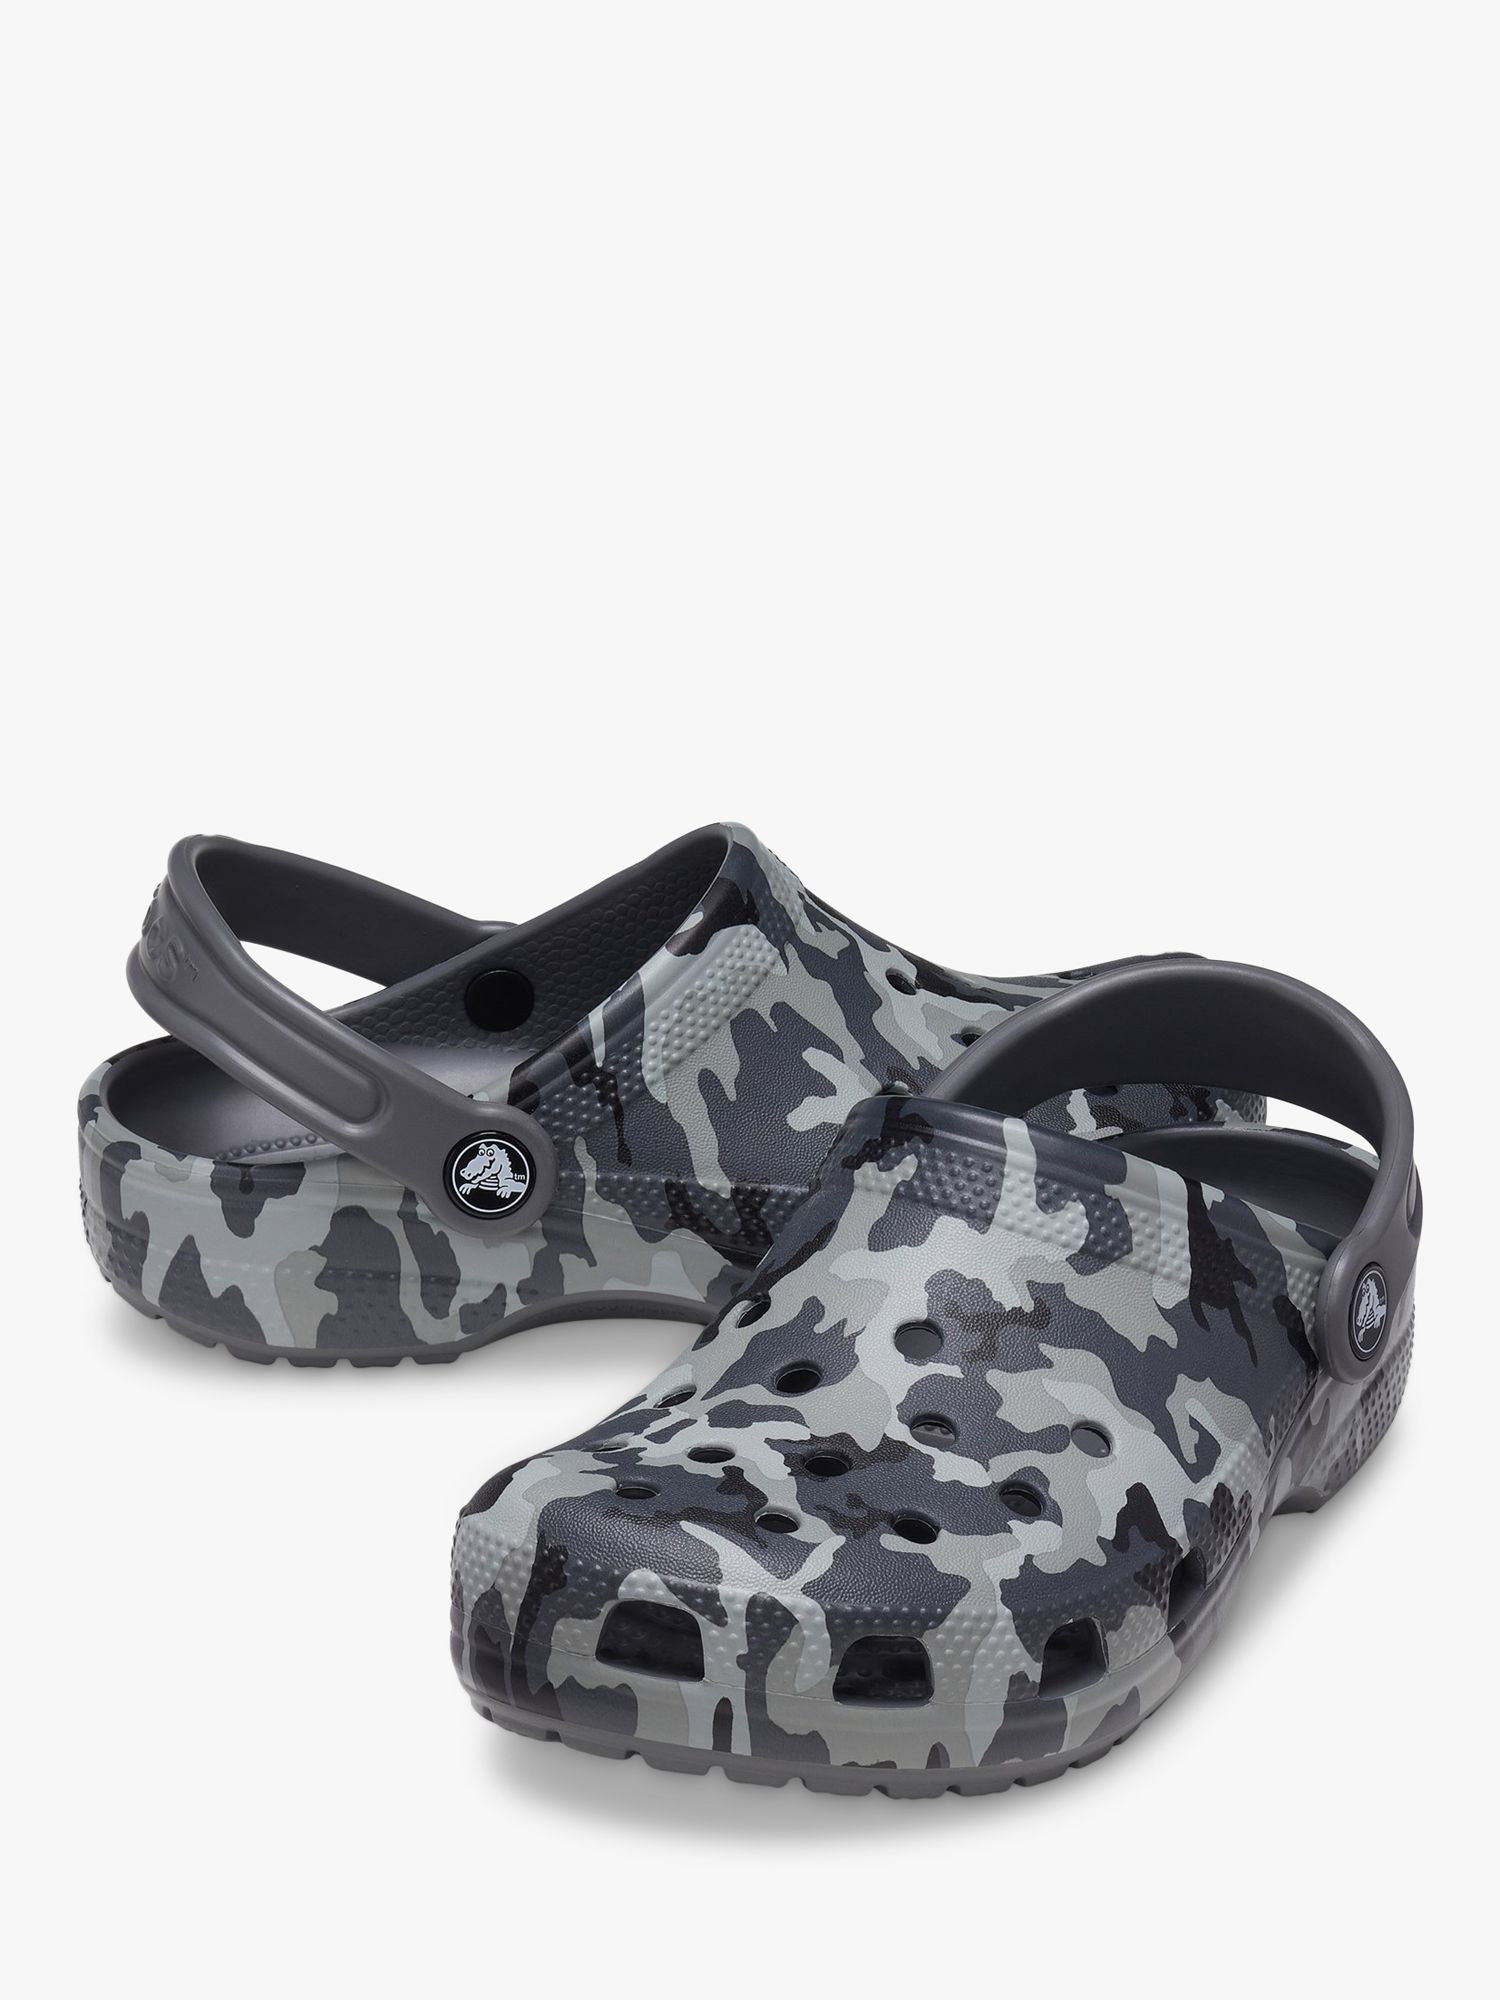 Crocs Kids' Classic Camouflage Print Clogs, Black/Grey, 13 Jnr